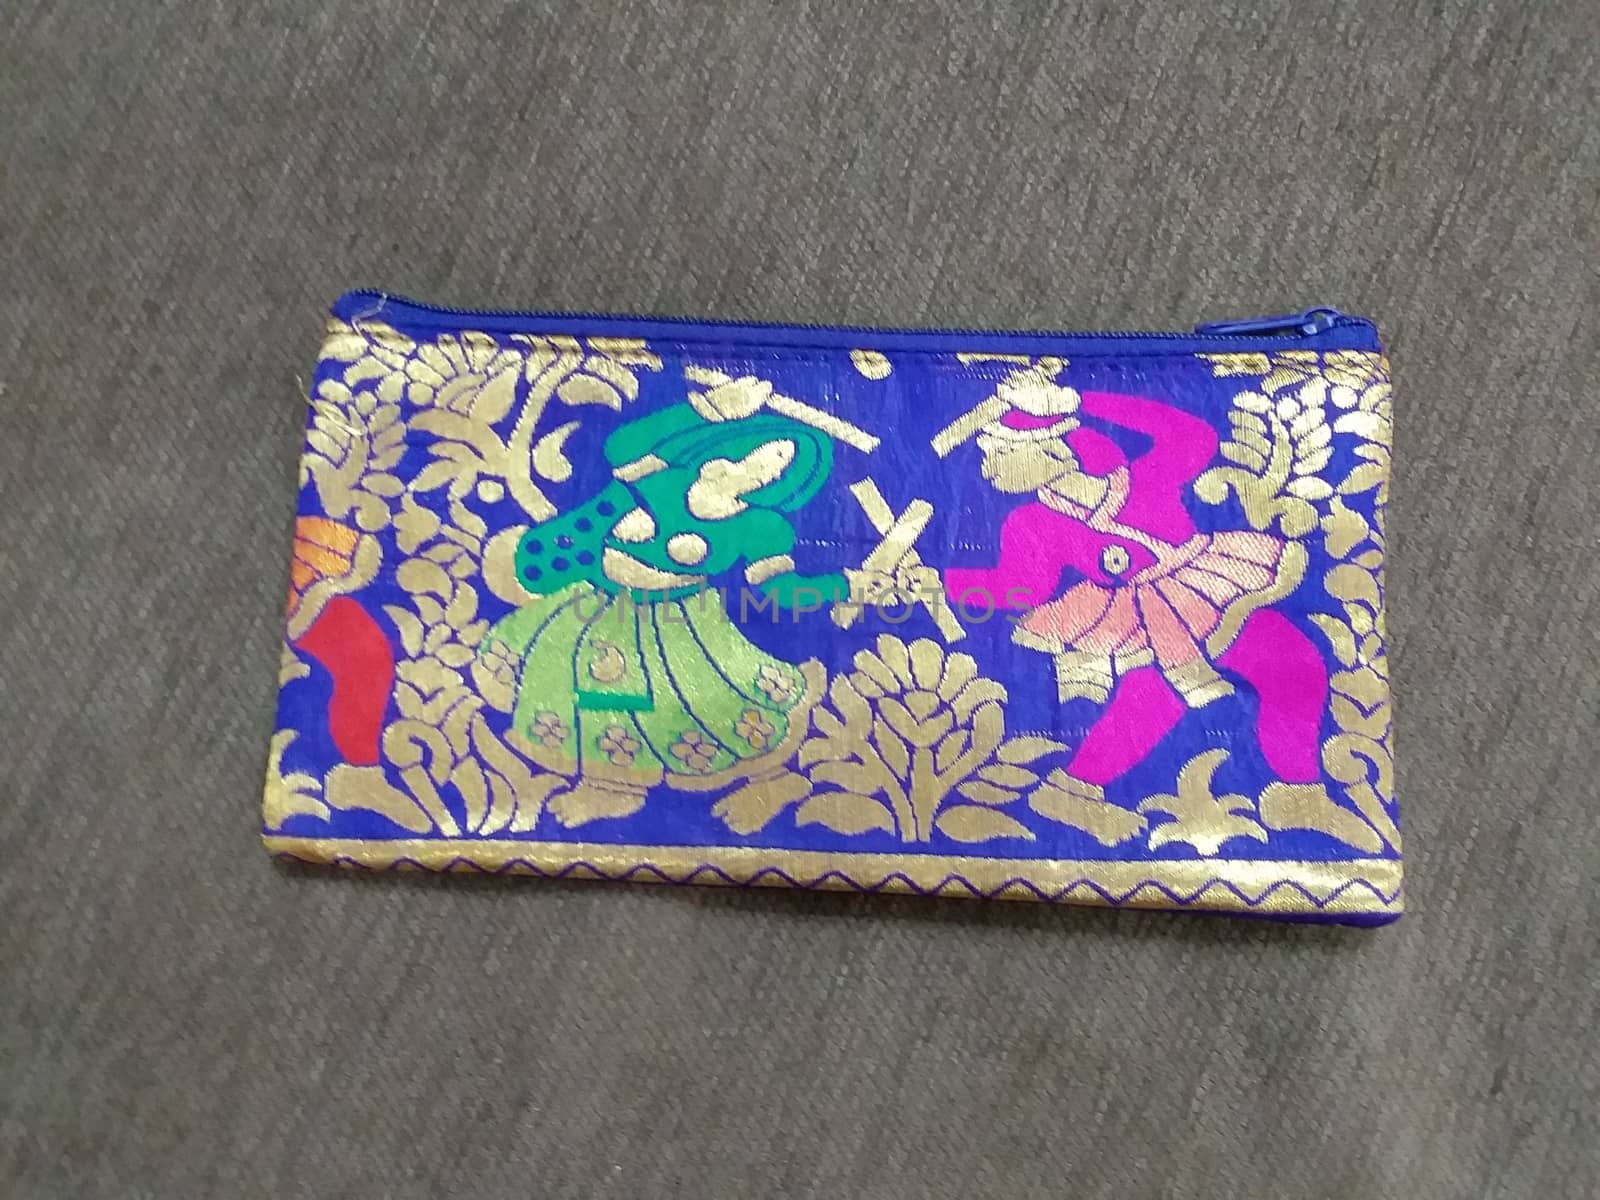 a fabric purse by gswagh71